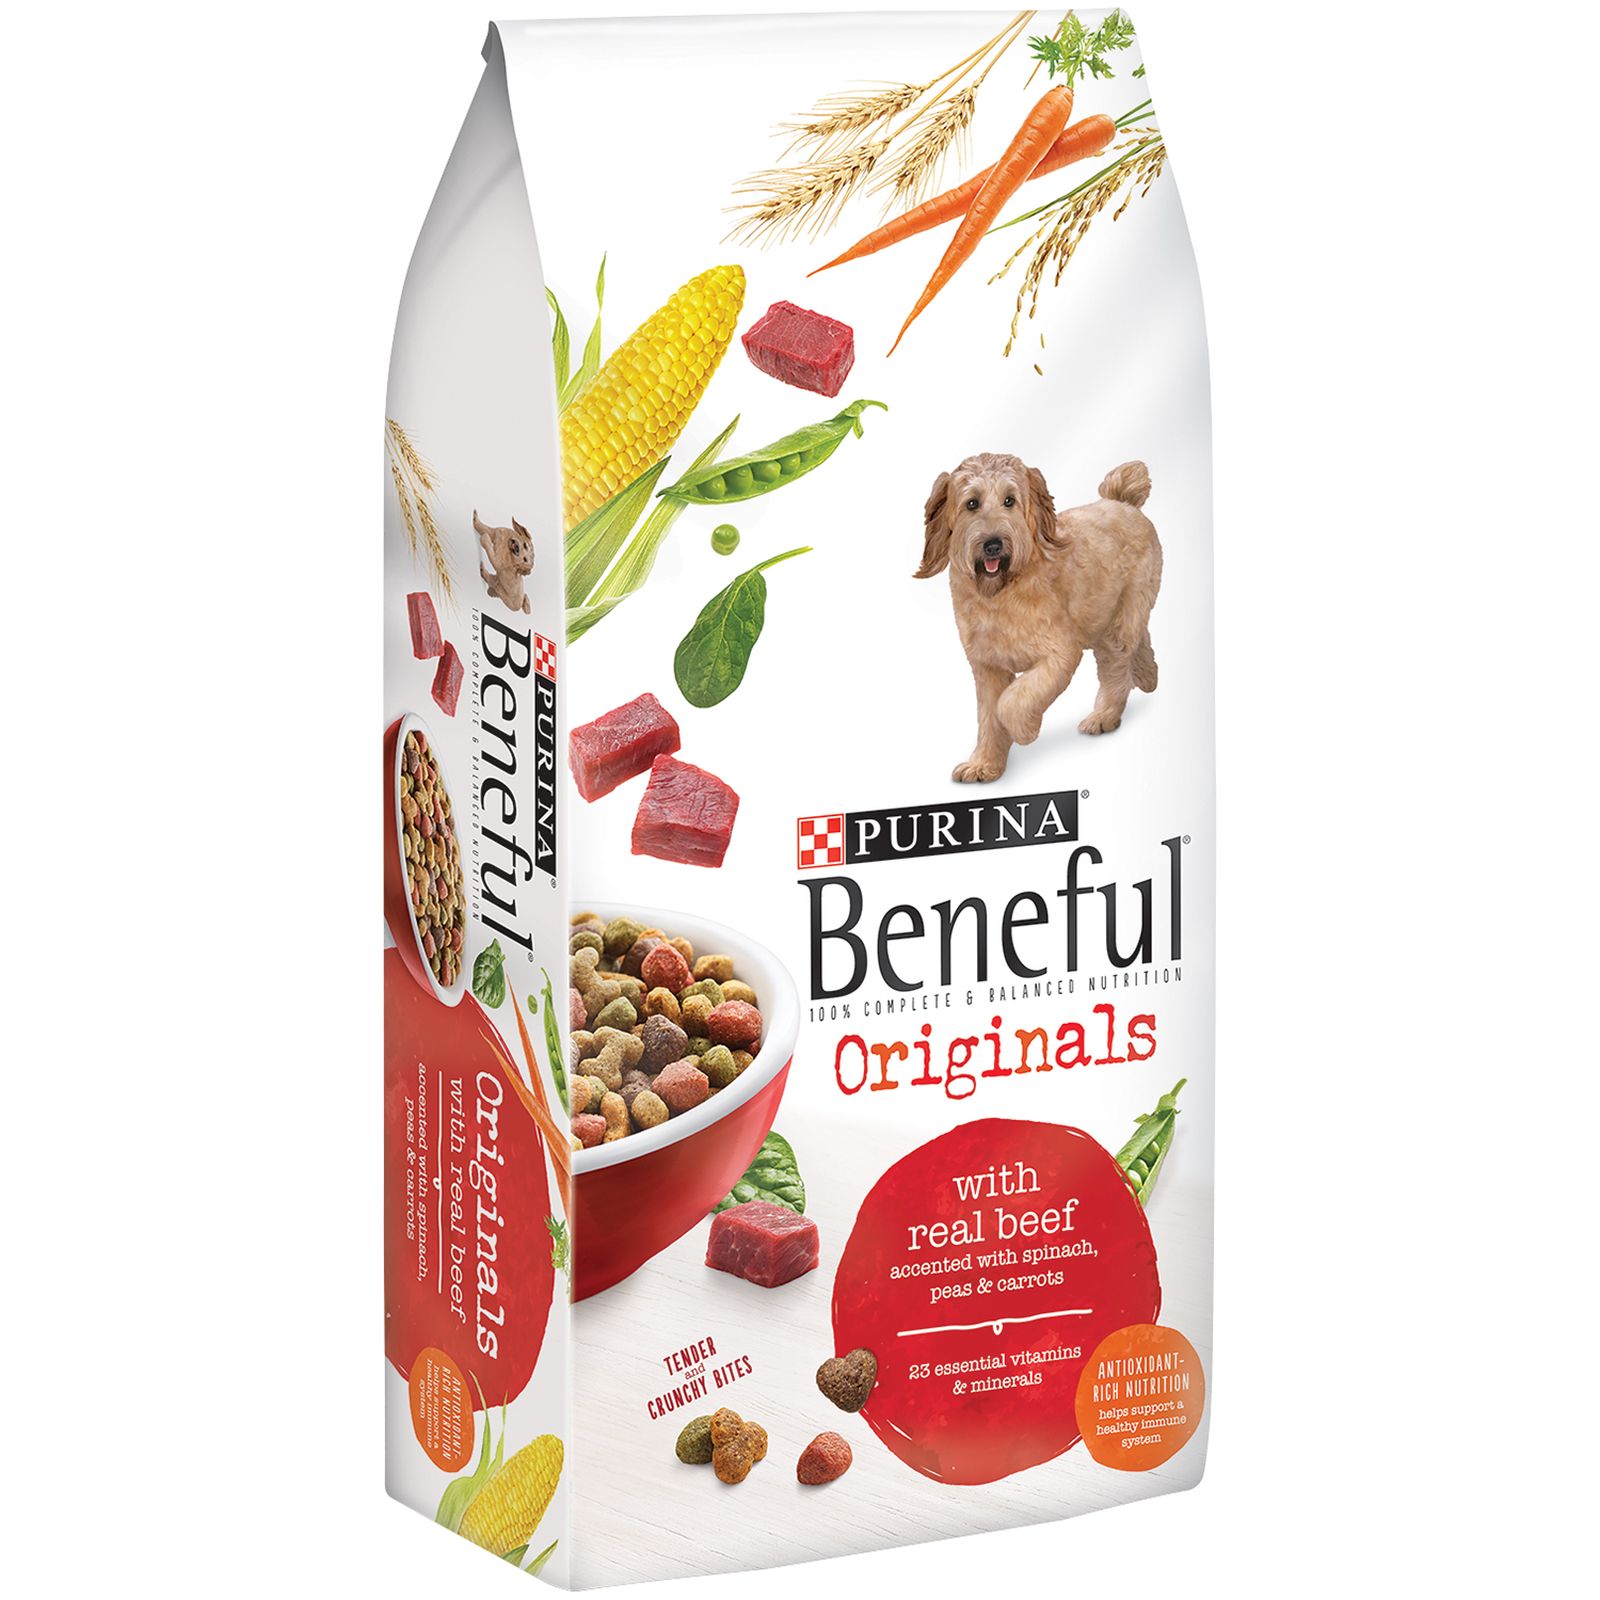 Beneful Originals With Beef Dog Food 31.1 lb. Bag